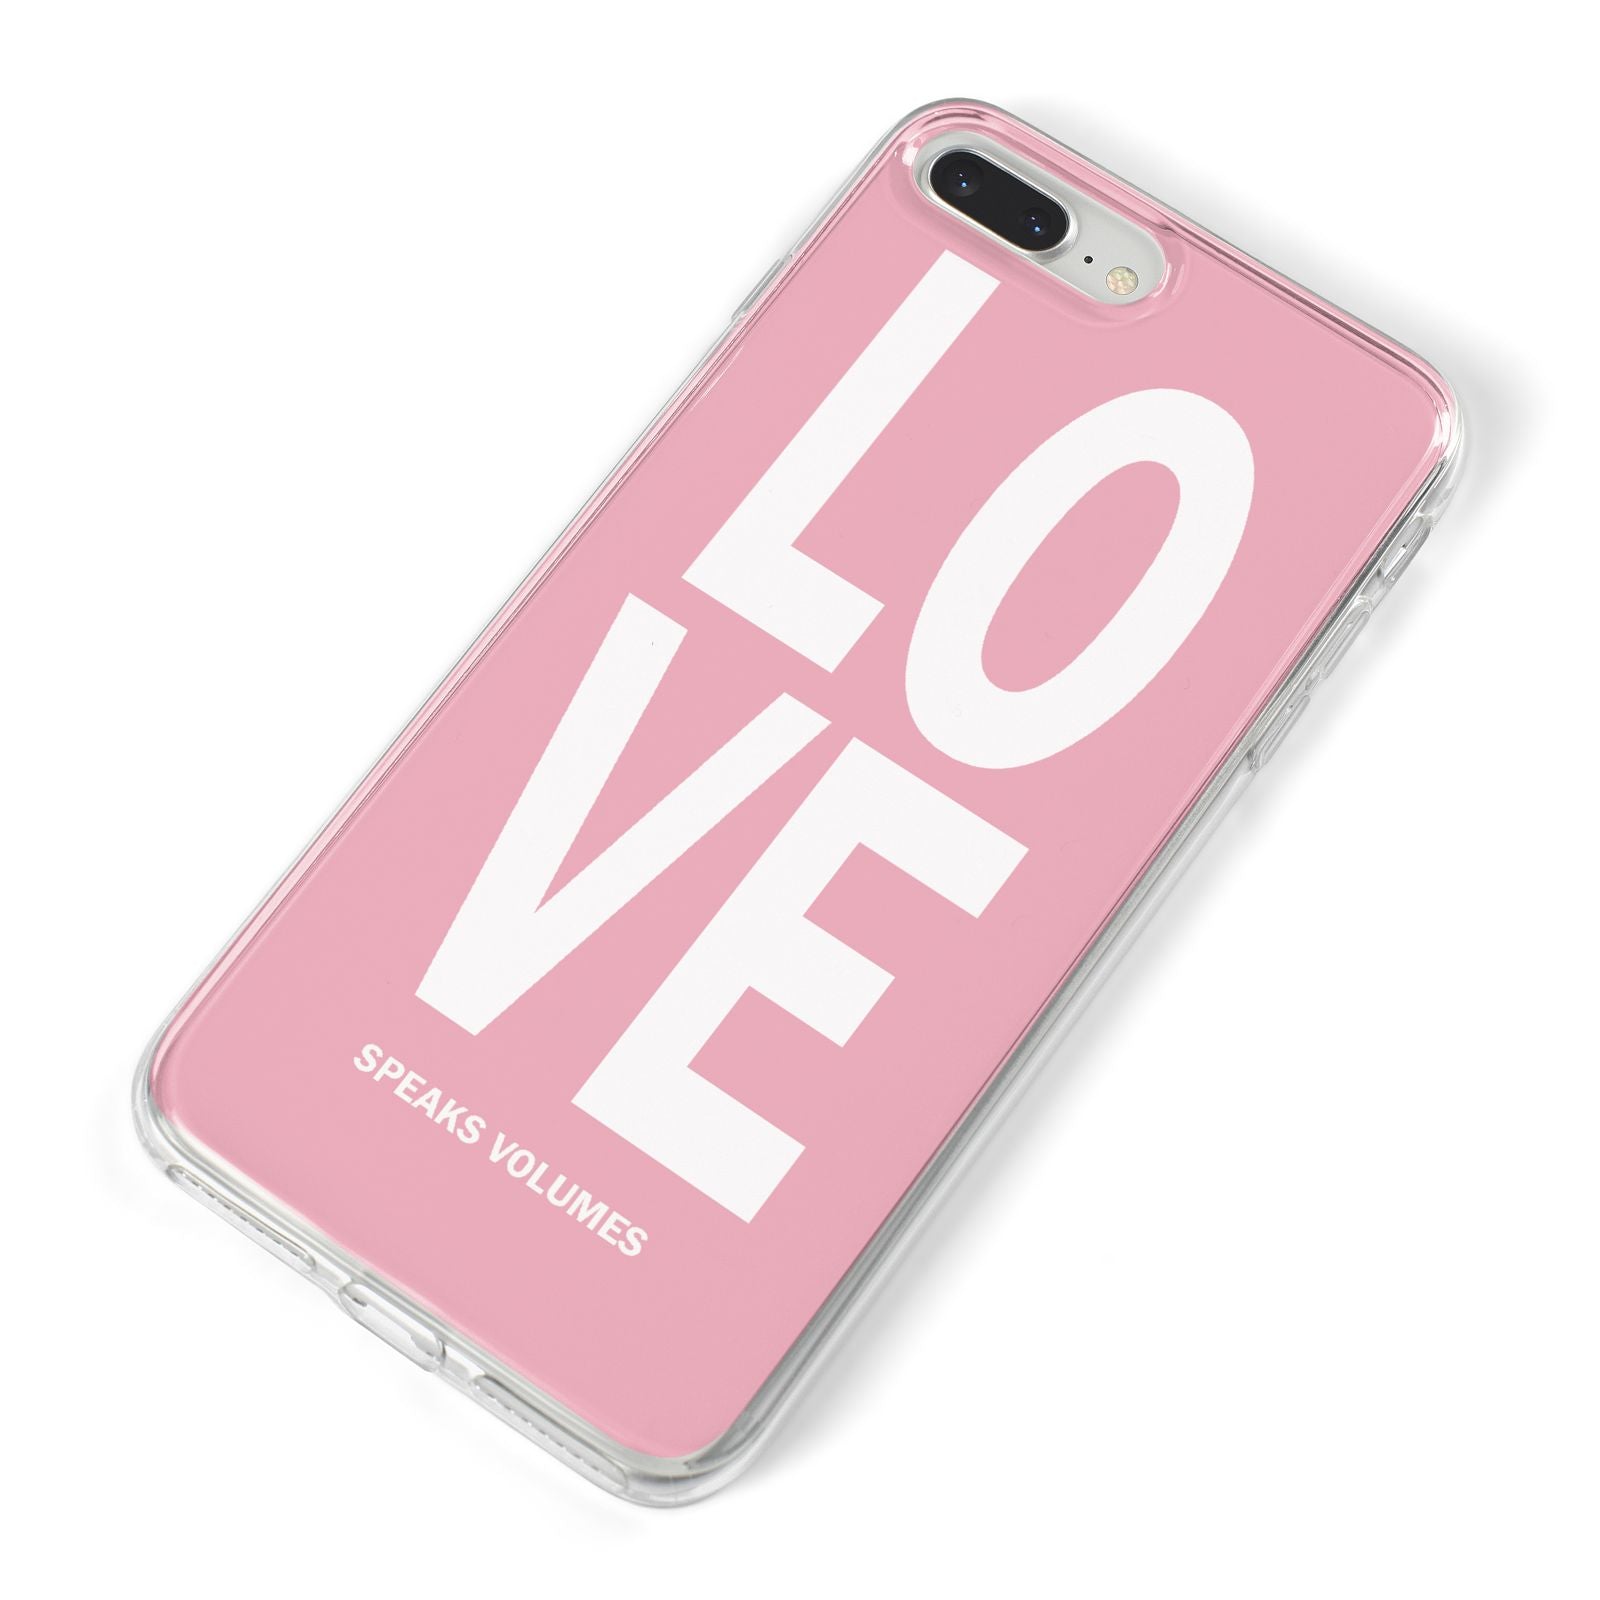 Valentines Love Speaks Volumes iPhone 8 Plus Bumper Case on Silver iPhone Alternative Image